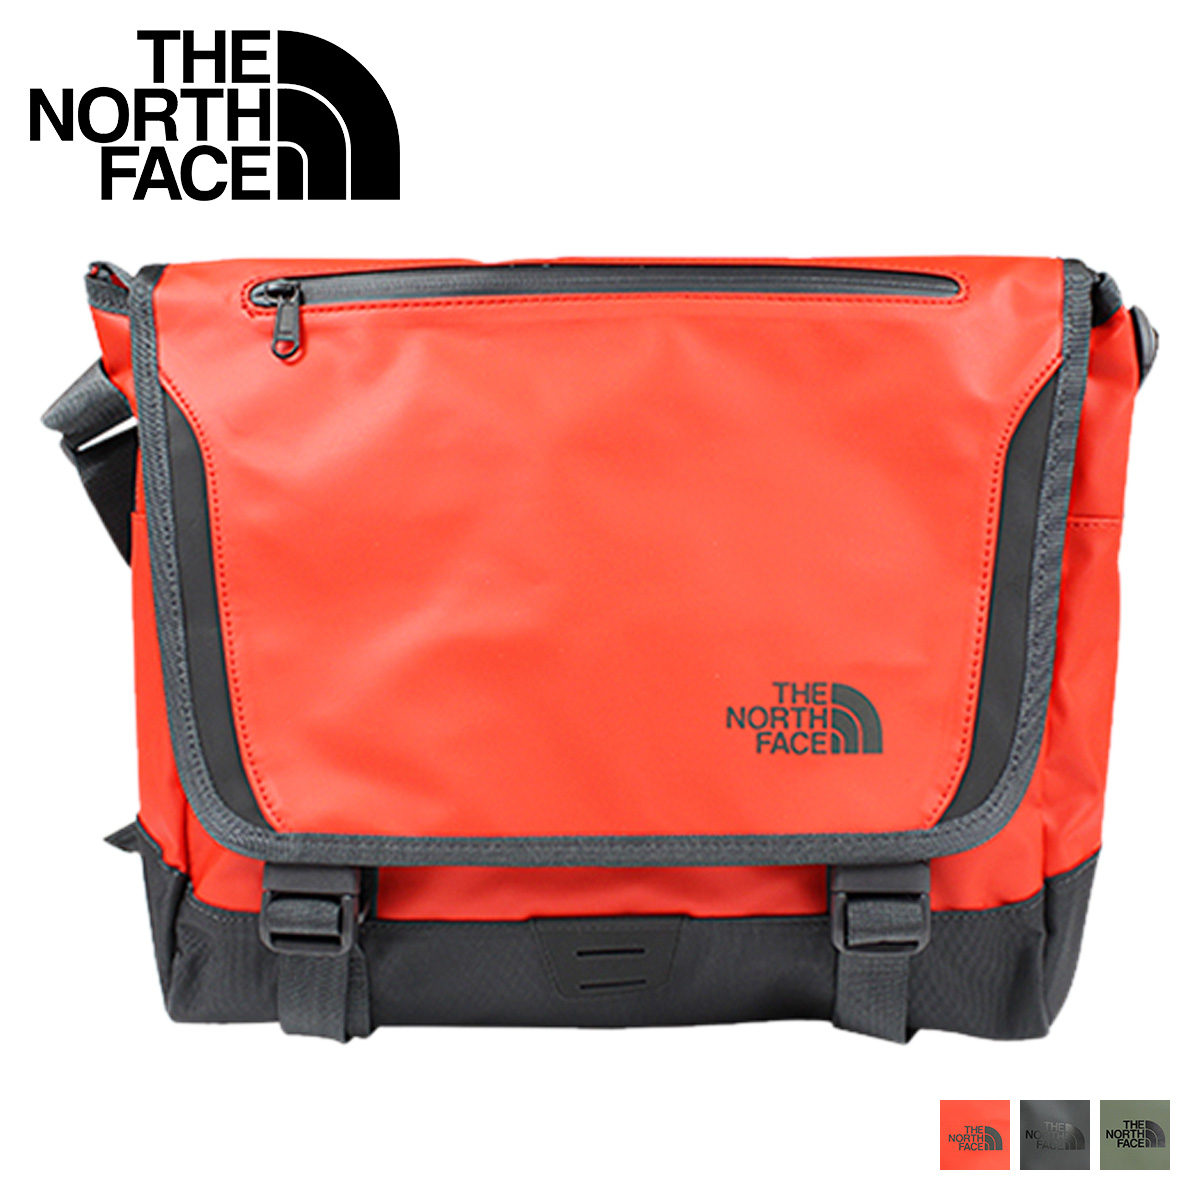 Sugar Online Shop: The north face THE NORTH FACE Messenger bag, mens